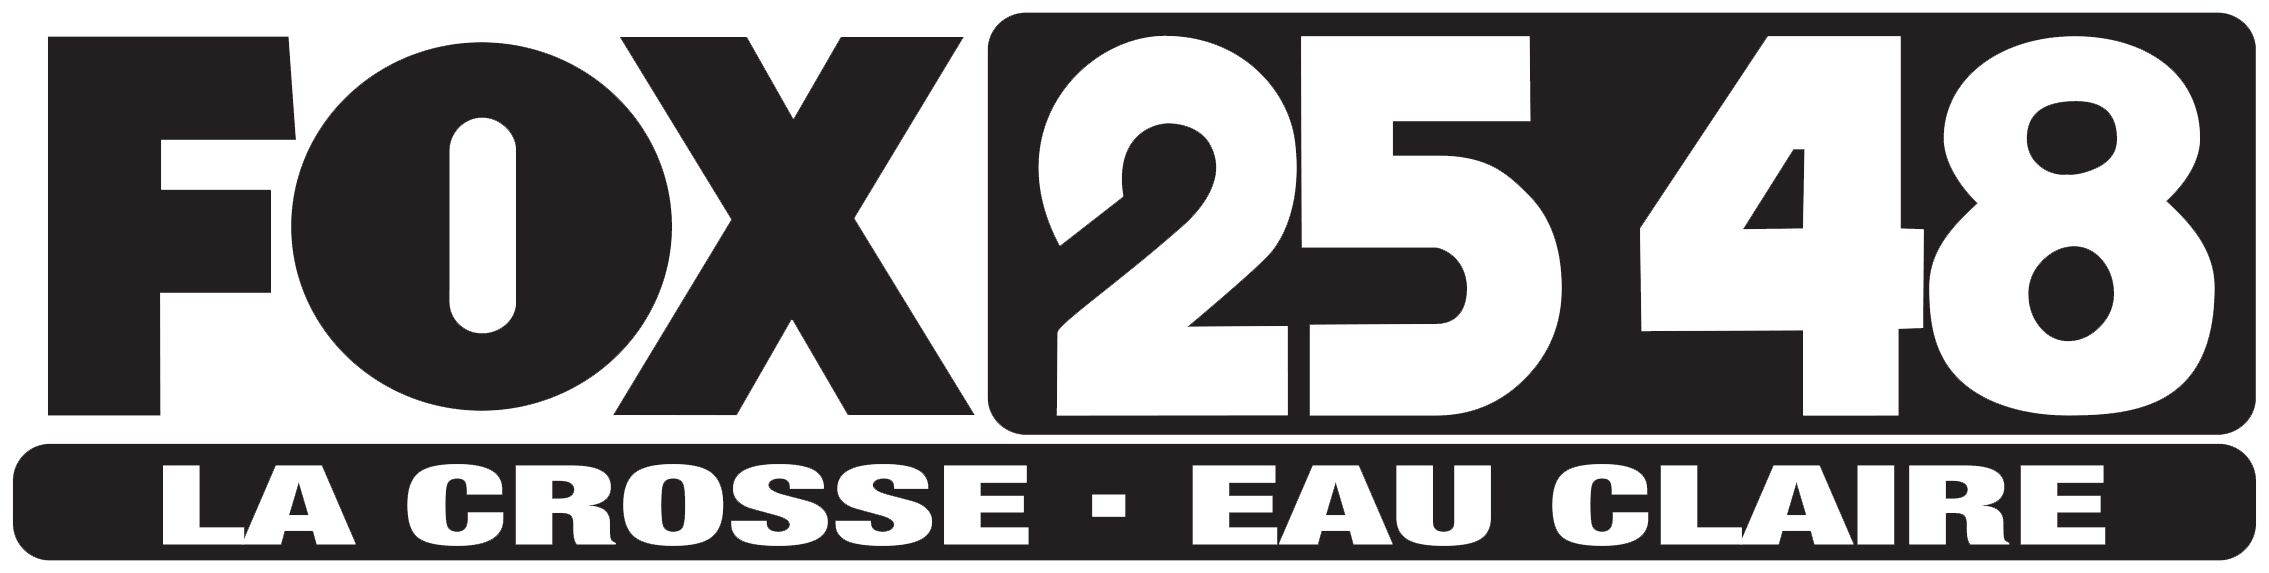 Fox 25 logo